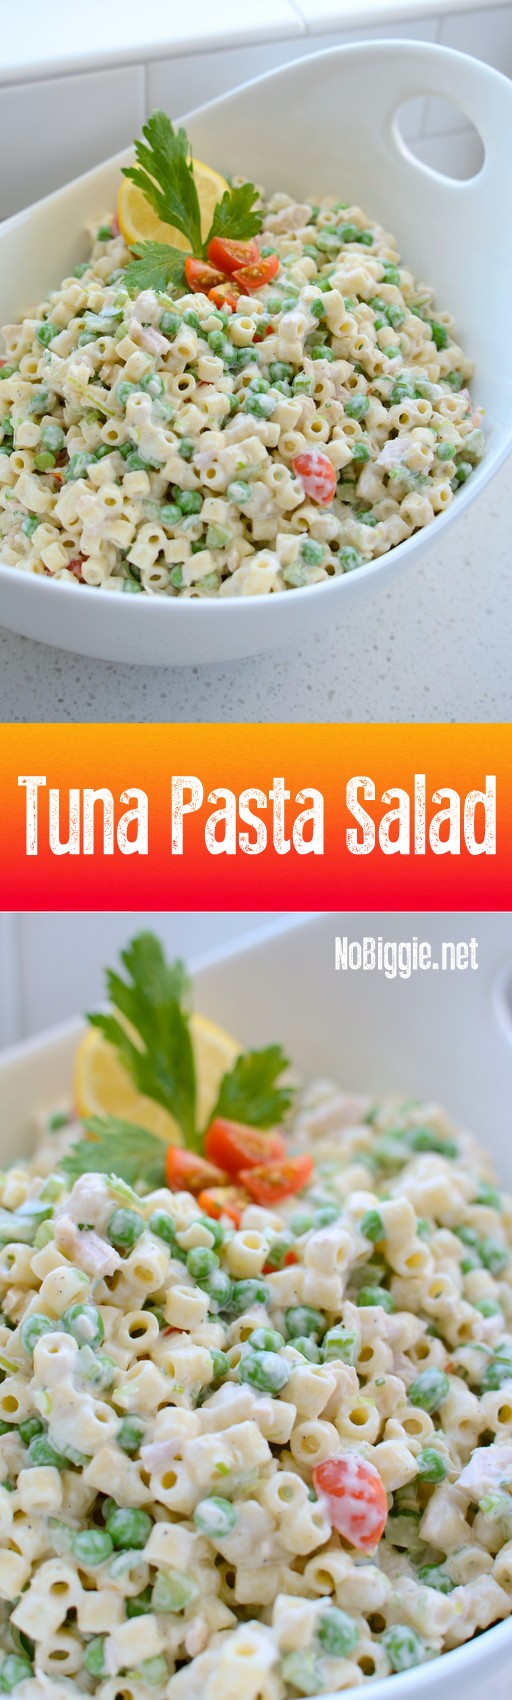 http://www.nobiggie.net/wp-content/uploads/2016/06/Tuna-Pasta-Salad.jpg